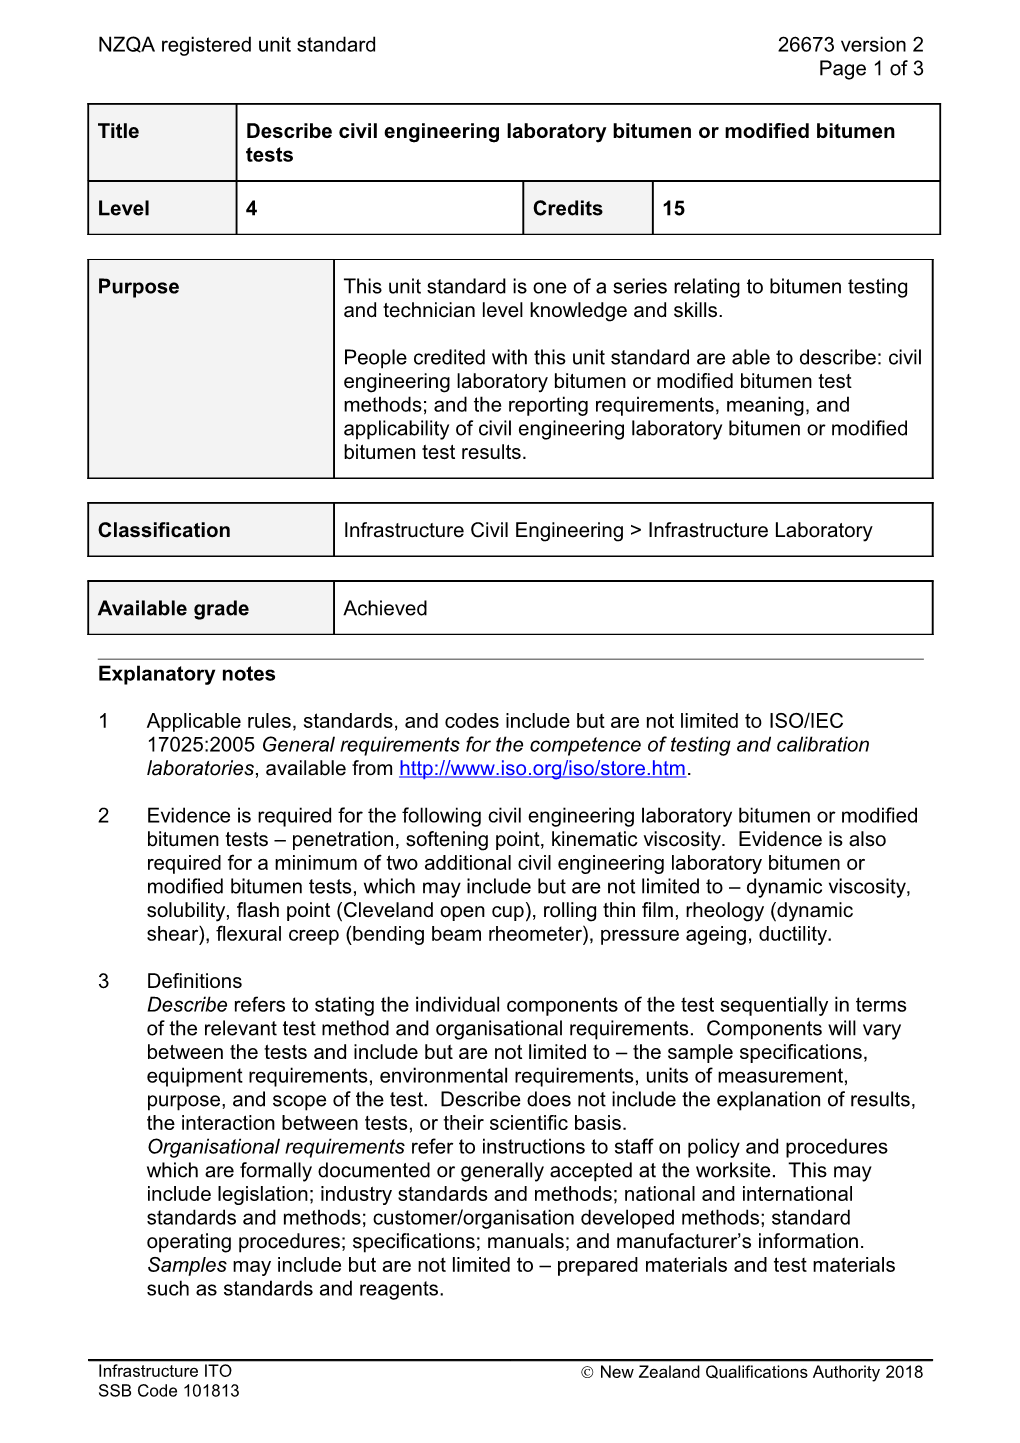 26673 Describe Civil Engineering Laboratory Bitumen Or Modified Bitumen Tests